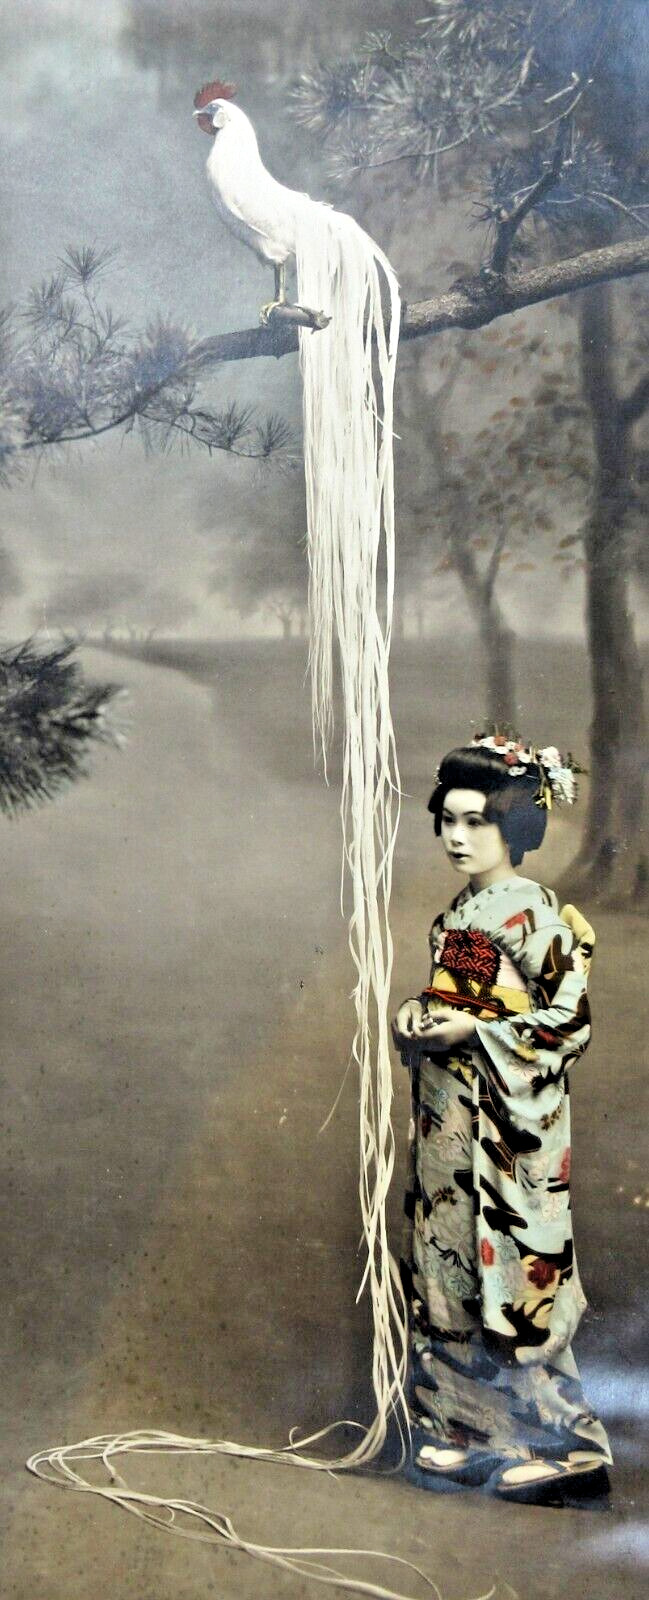 Antique Japanese Photo Long Tail Pheasant Hand Colored Yamatoya Art Gallery 1920